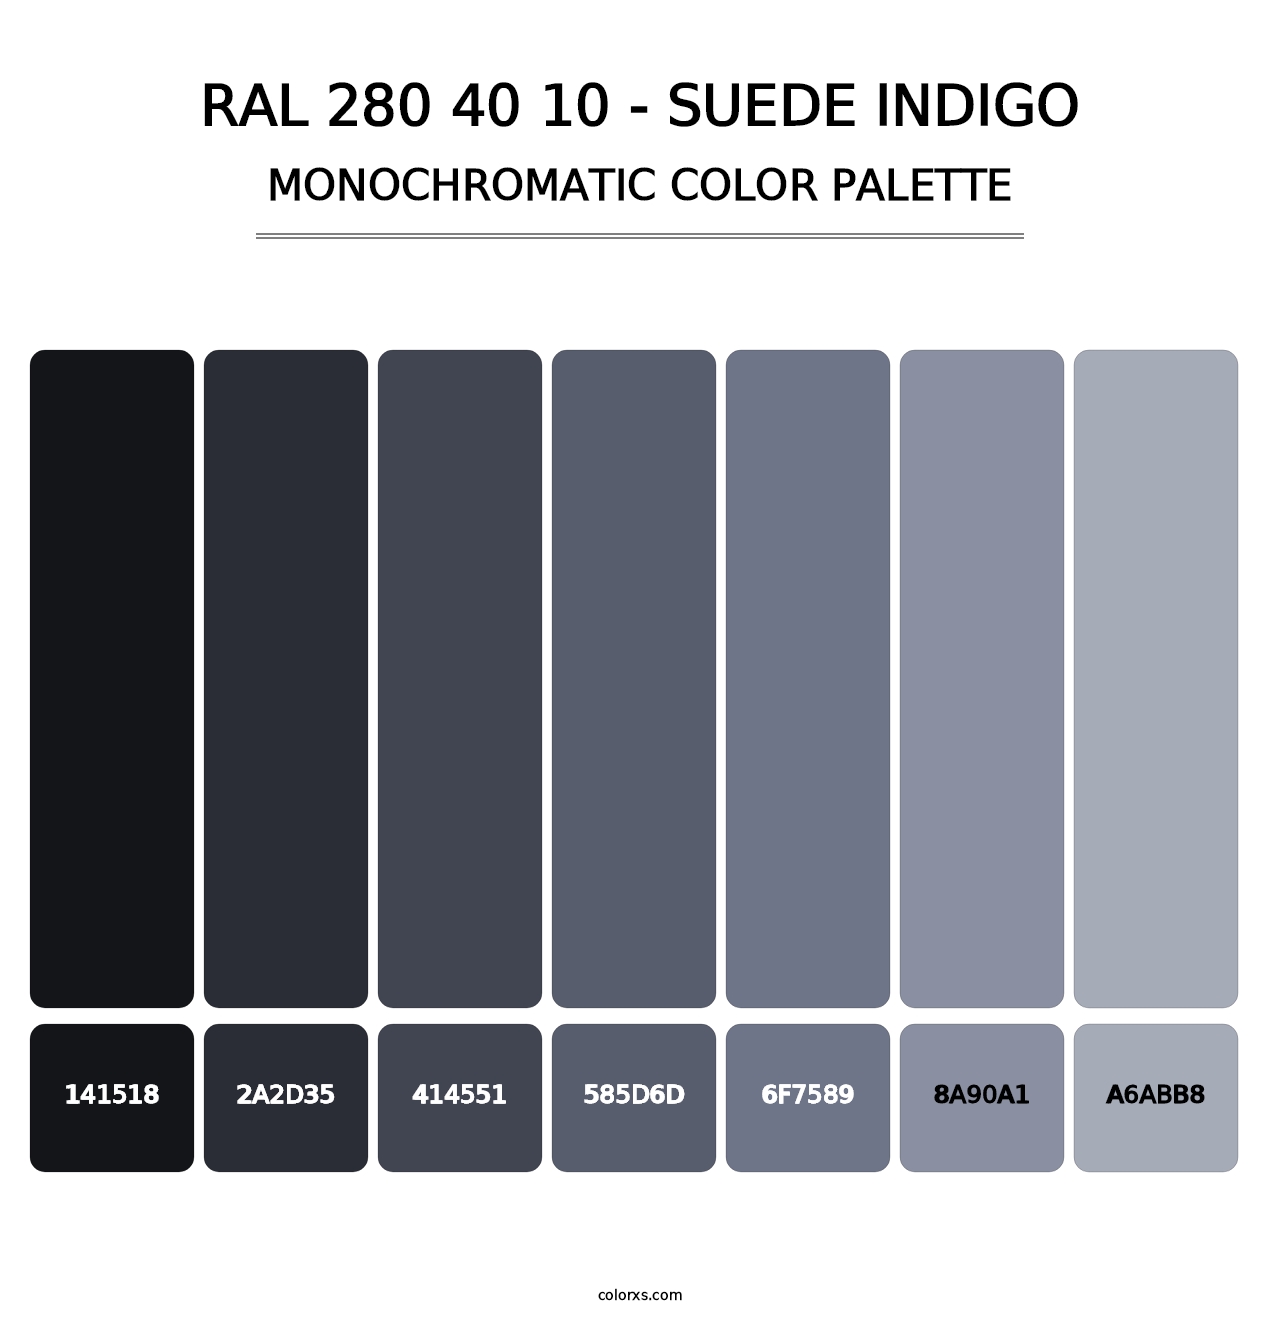 RAL 280 40 10 - Suede Indigo - Monochromatic Color Palette